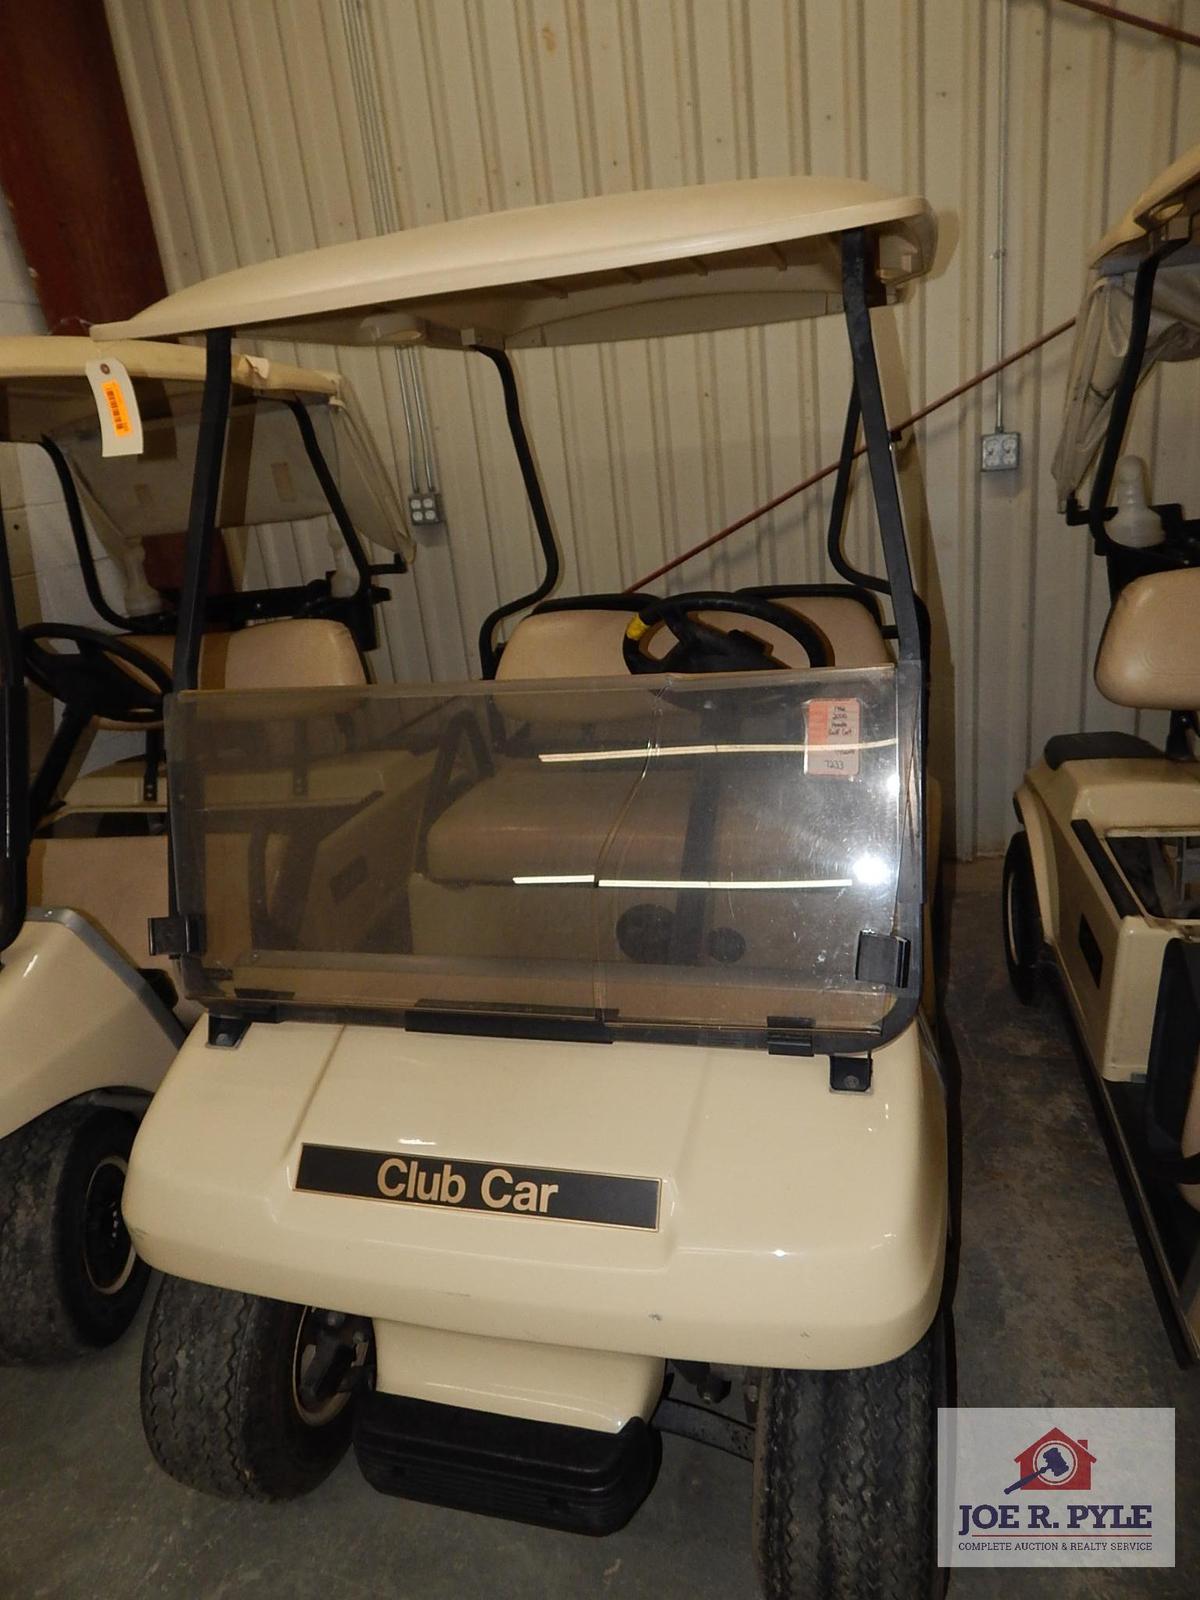 2000 Club Car golf cart vin: 946604 no battery